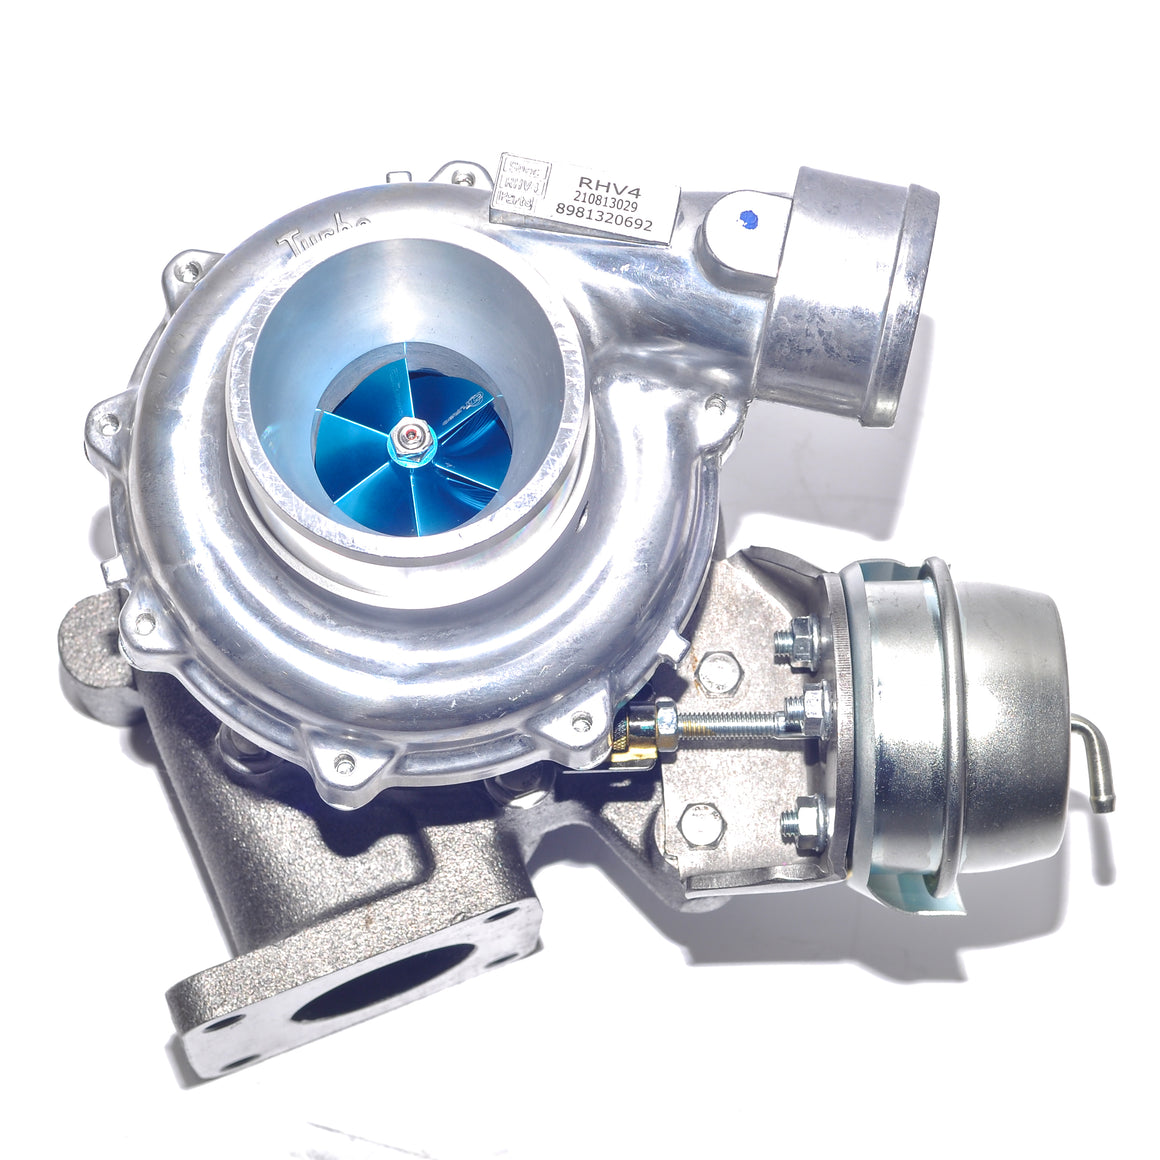 CCT Stage One Upgrade Hi-Flow Turbocharger To Suit Holden Colorado / Isuzu D-Max 4JJ1 3.0L 8971320692 VIGM